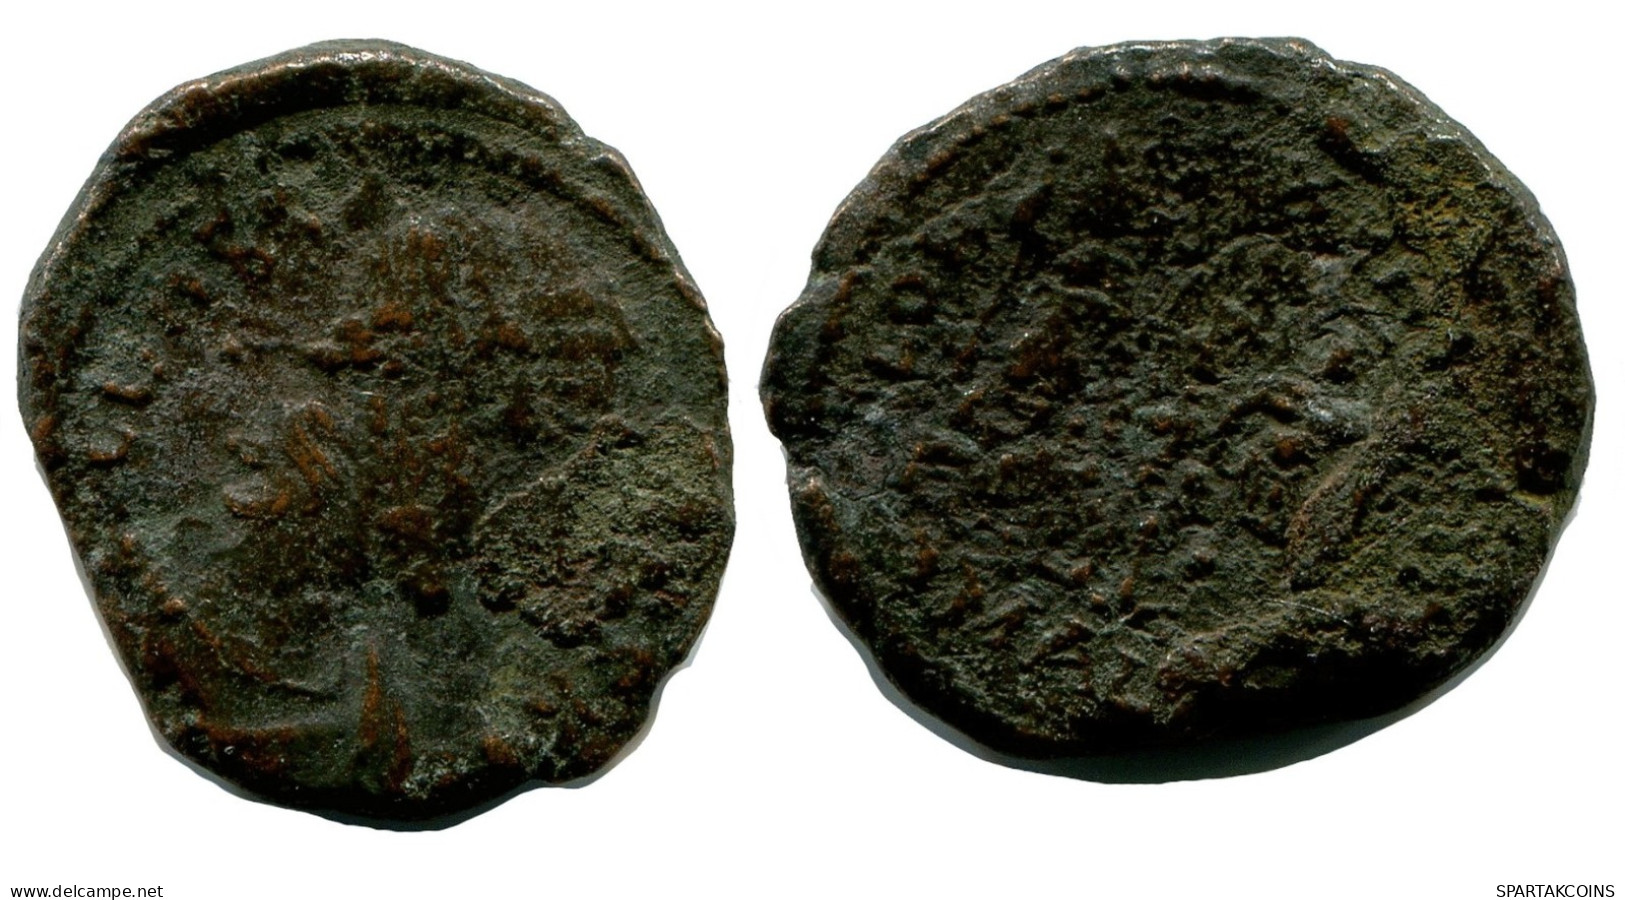 ROMAN Coin MINTED IN ALEKSANDRIA FOUND IN IHNASYAH HOARD EGYPT #ANC10176.14.U.A - El Imperio Christiano (307 / 363)